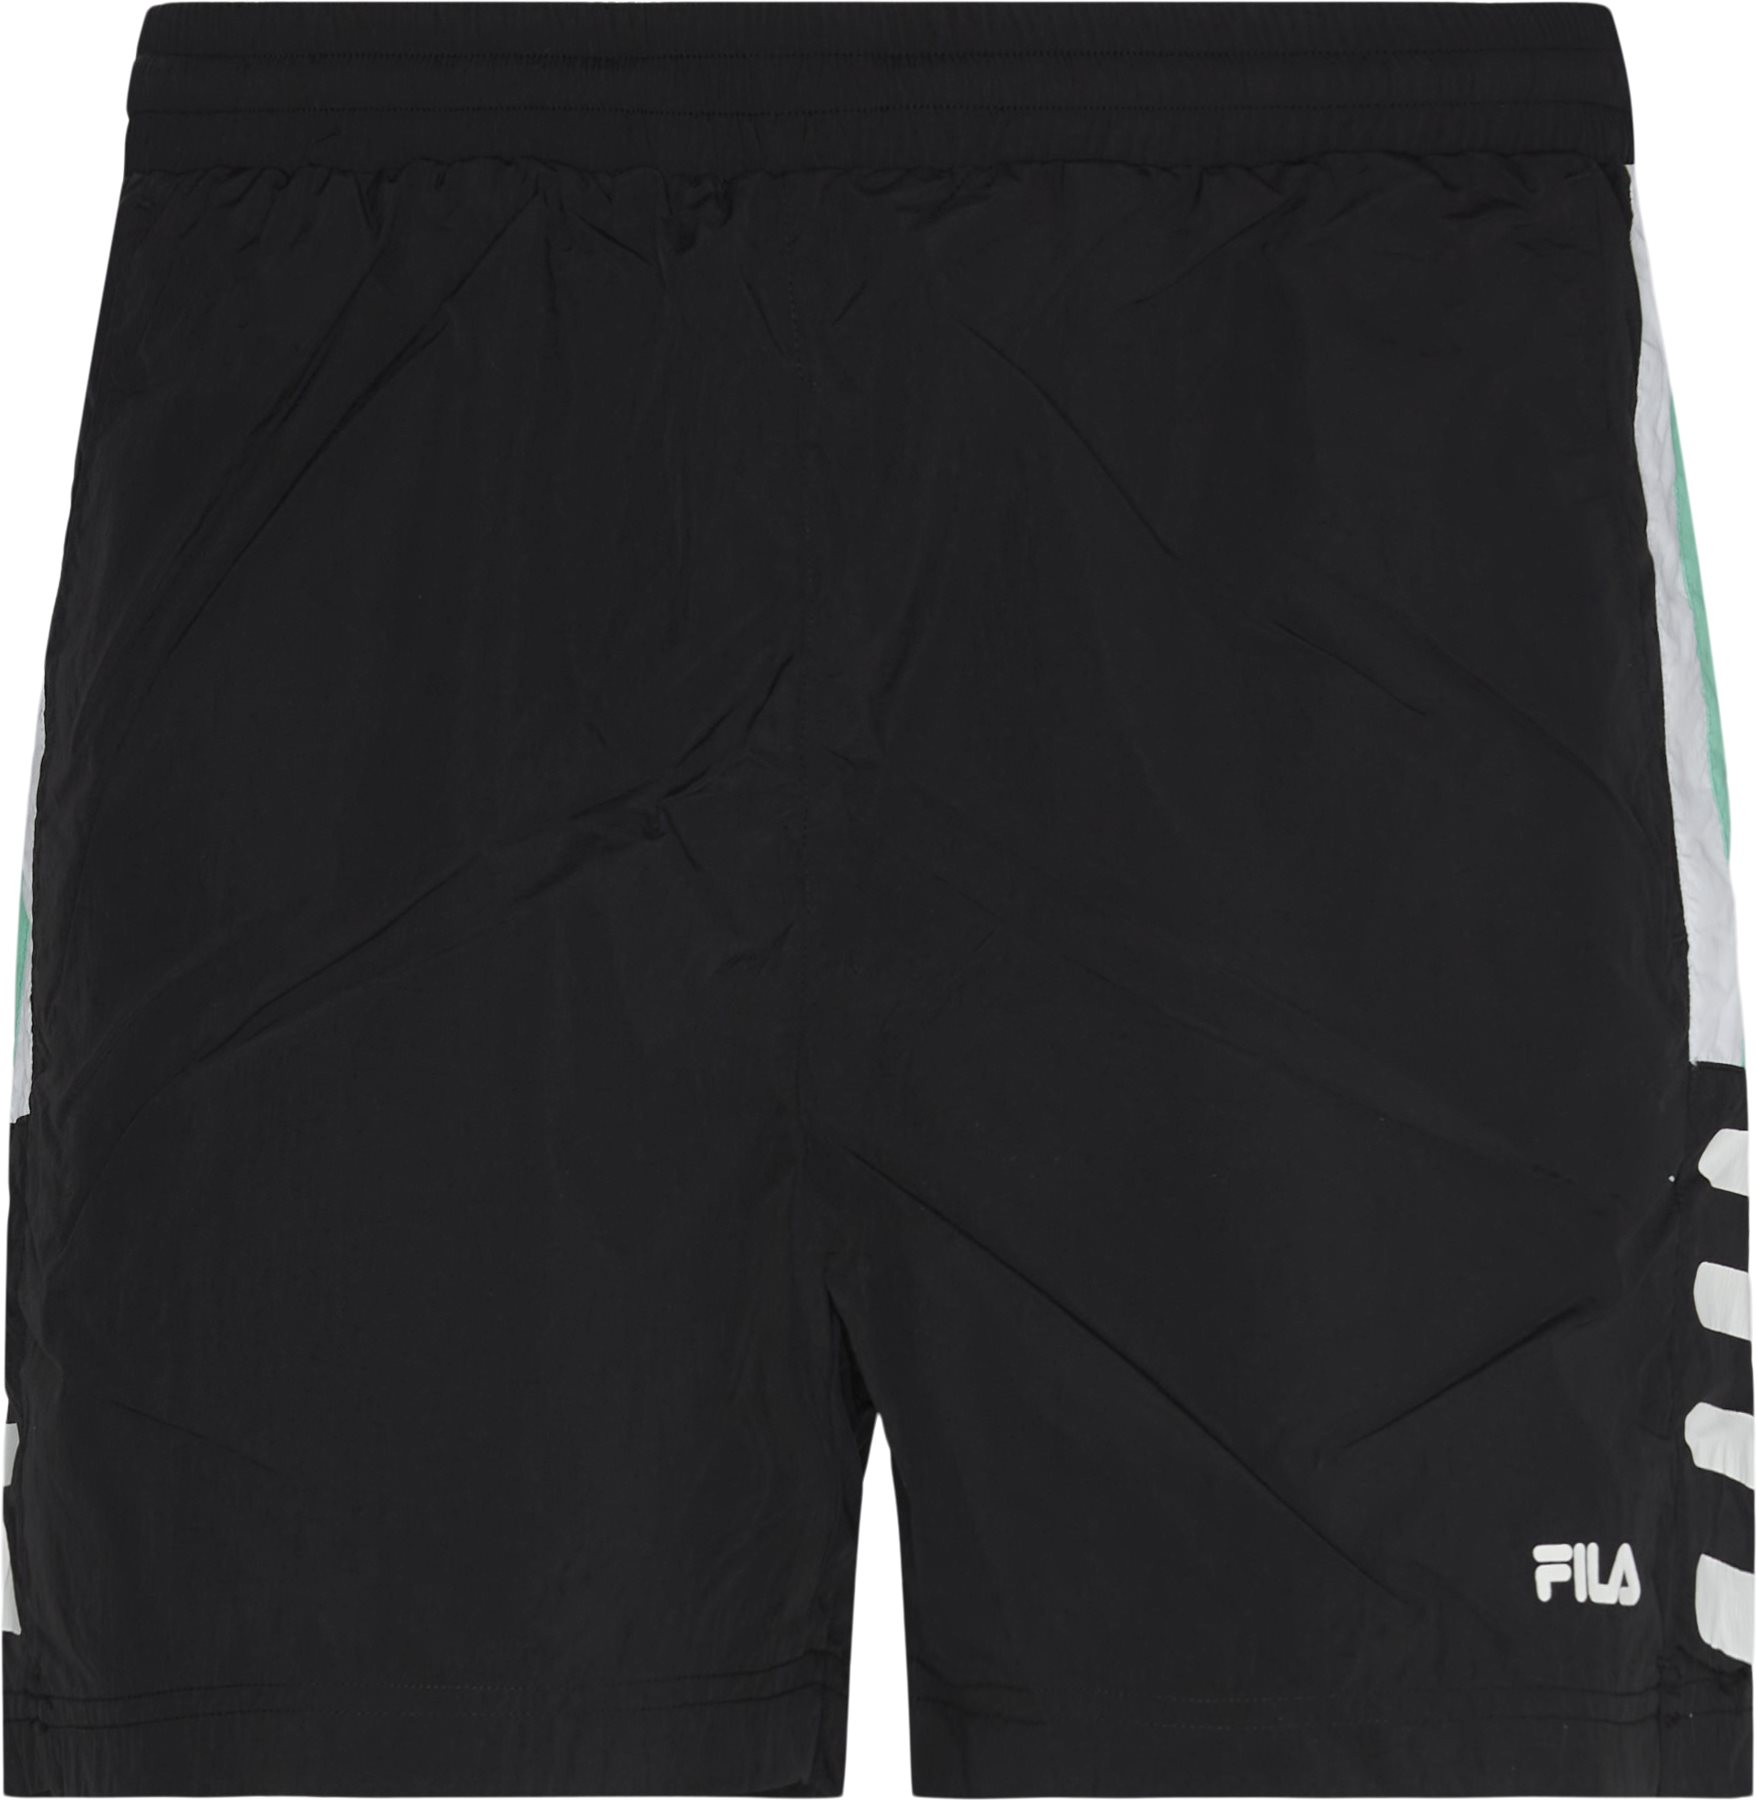 Ace Shorts - Shorts - Regular fit - Black